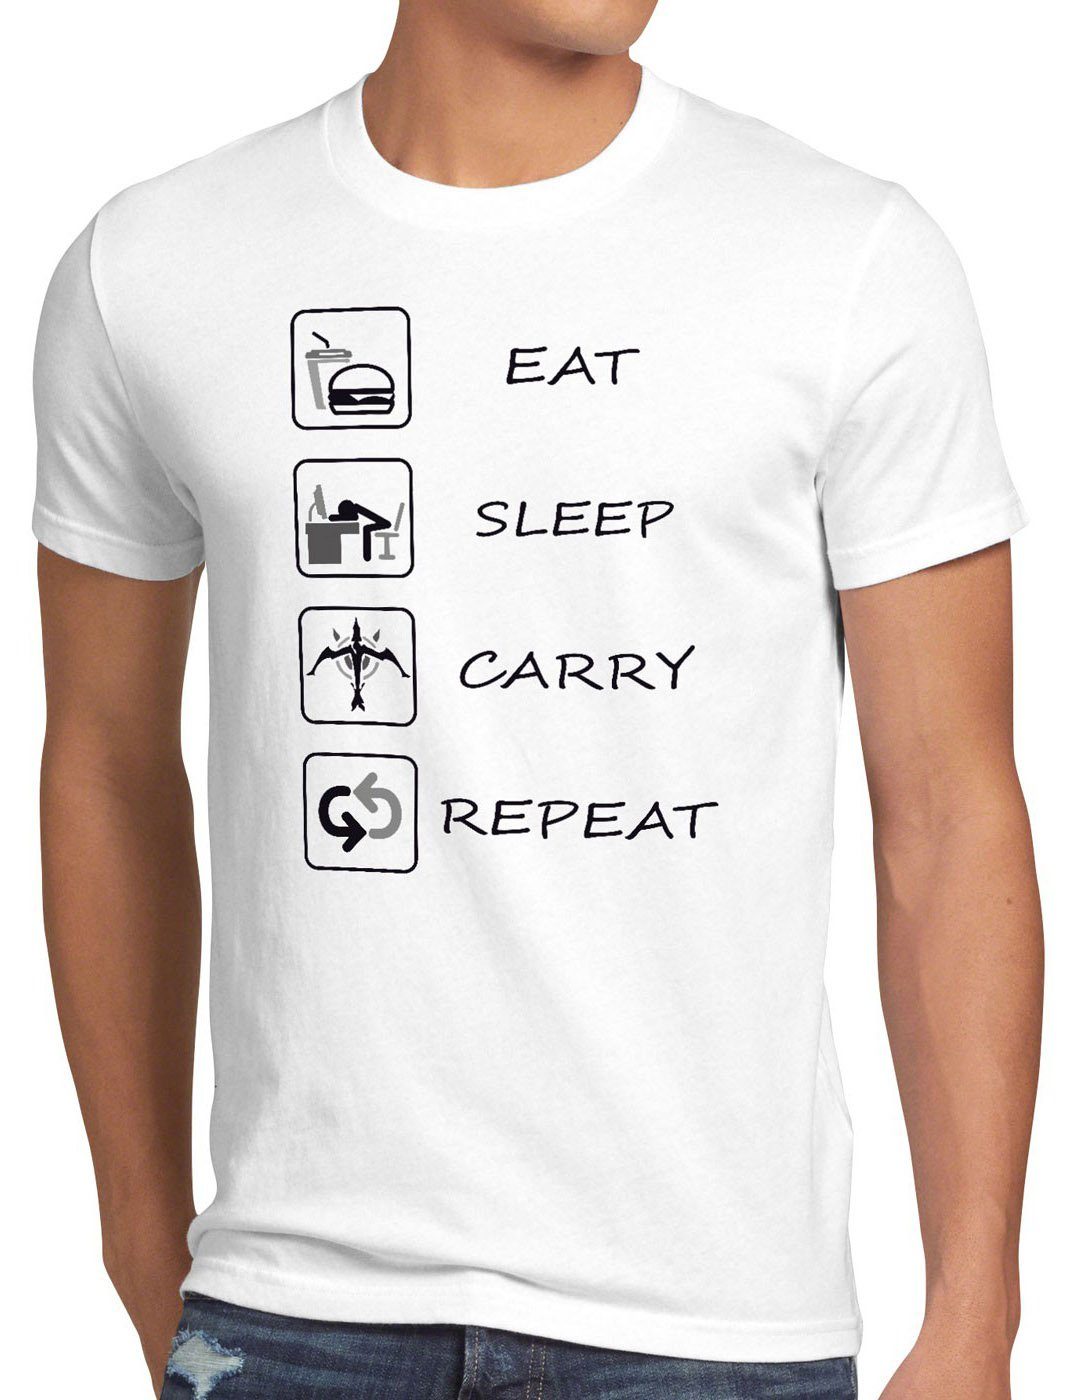 style3 Print-Shirt Herren T-Shirt Eat lol weiß dota league game Repeat legends Sleep gamer Carry carry